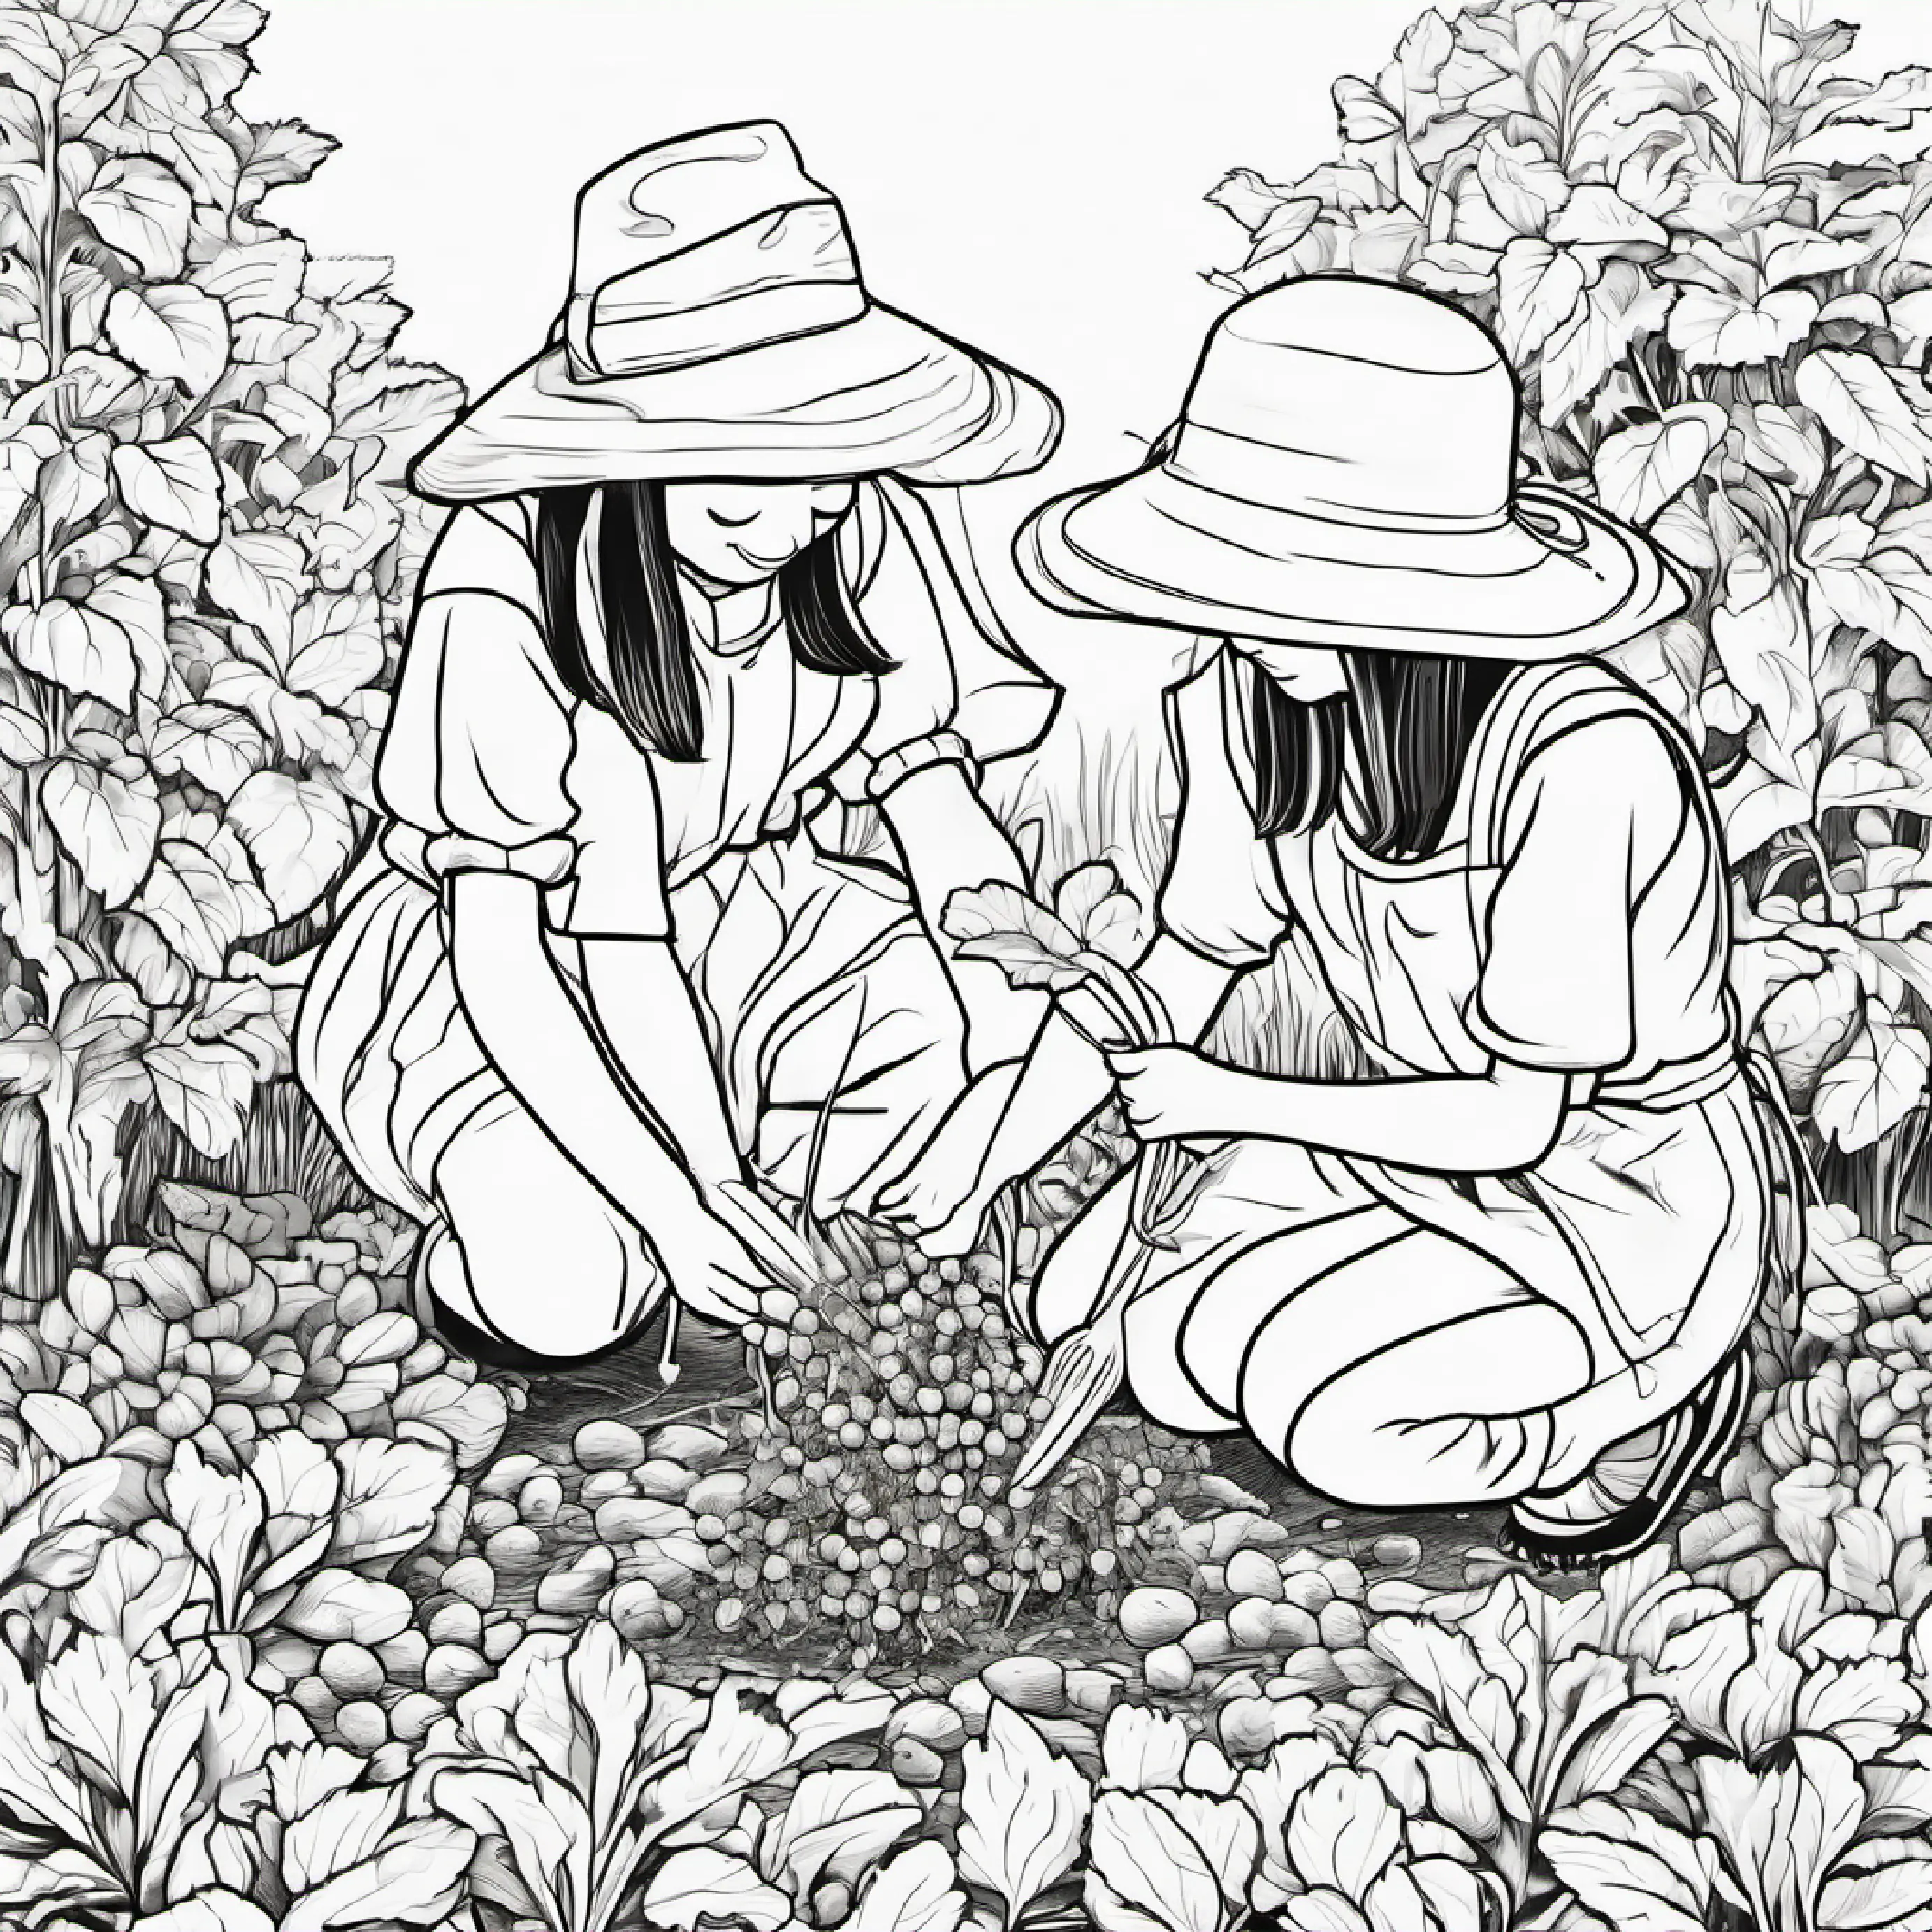 The girls prepare to plant radishes, enjoying teamwork.